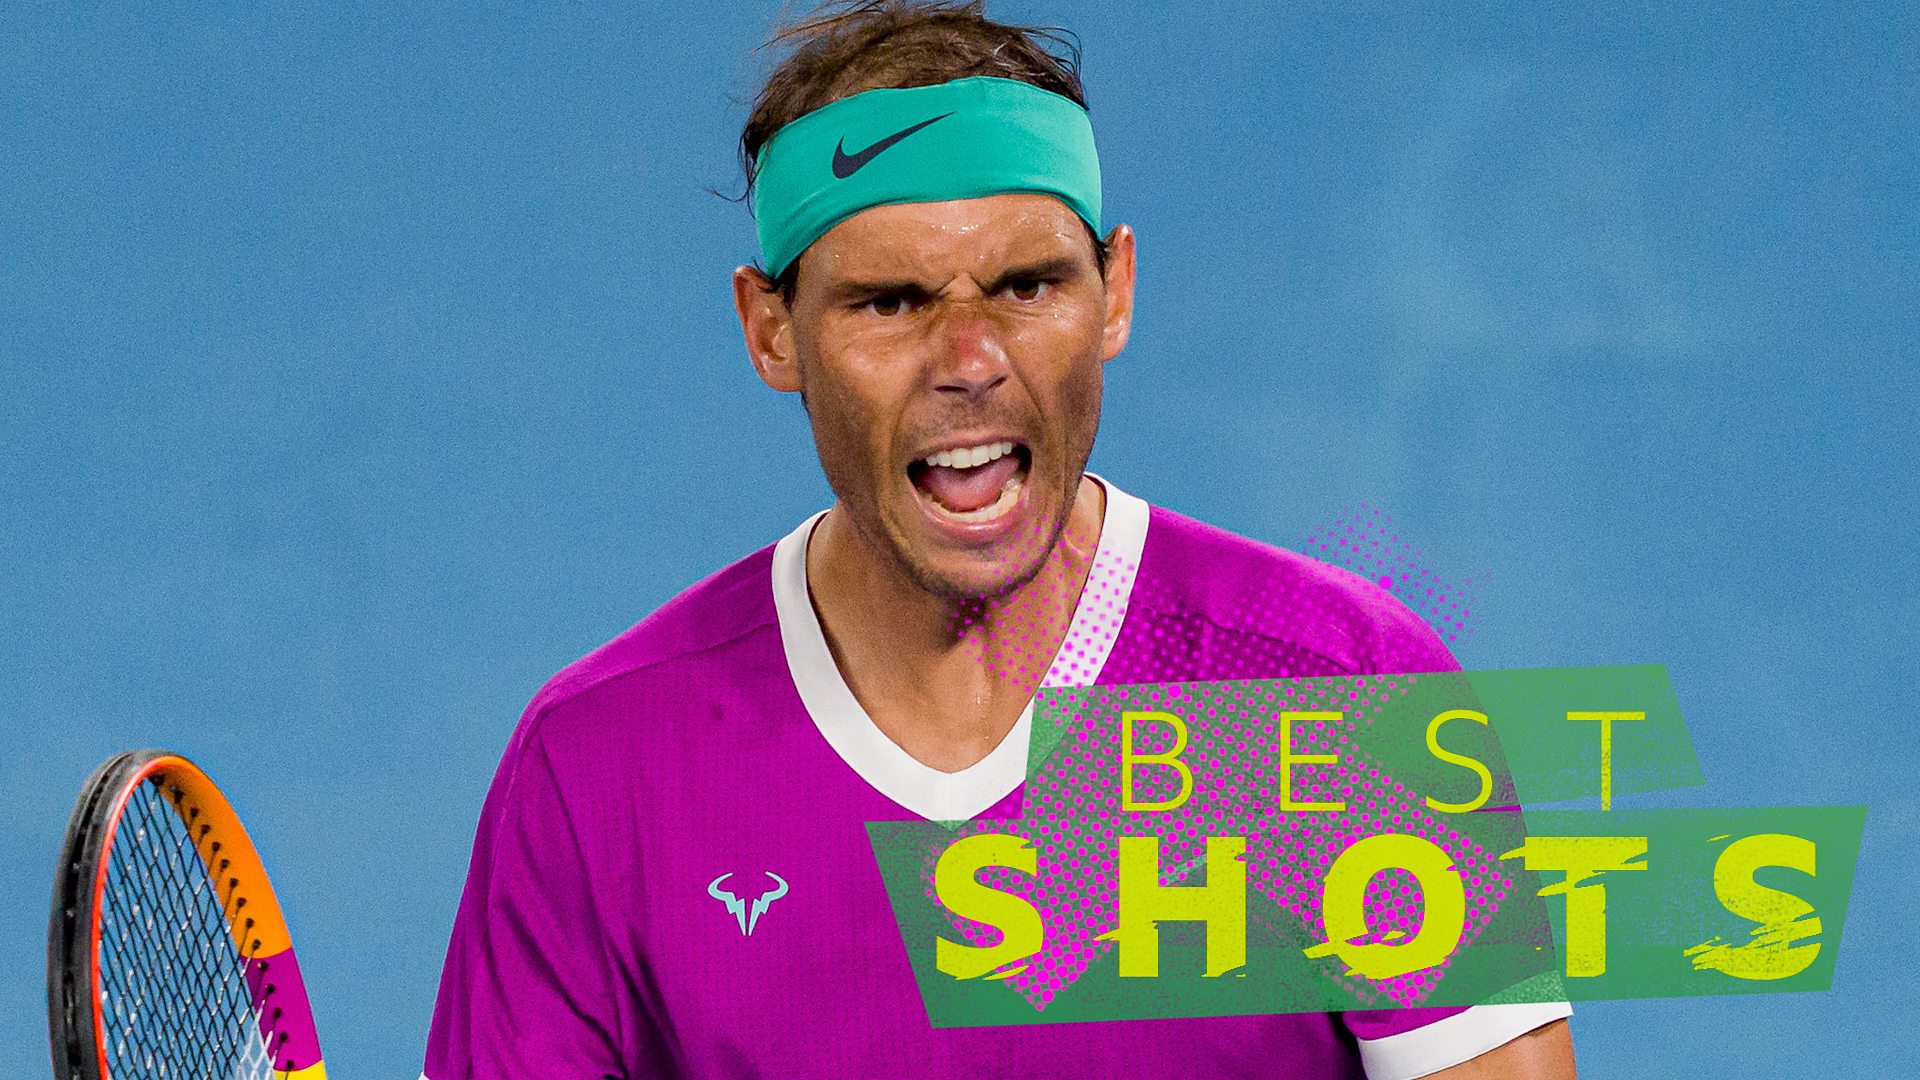 Australian Open Rafael Nadal beats Matteo Berrettini to reach final - watch best shots